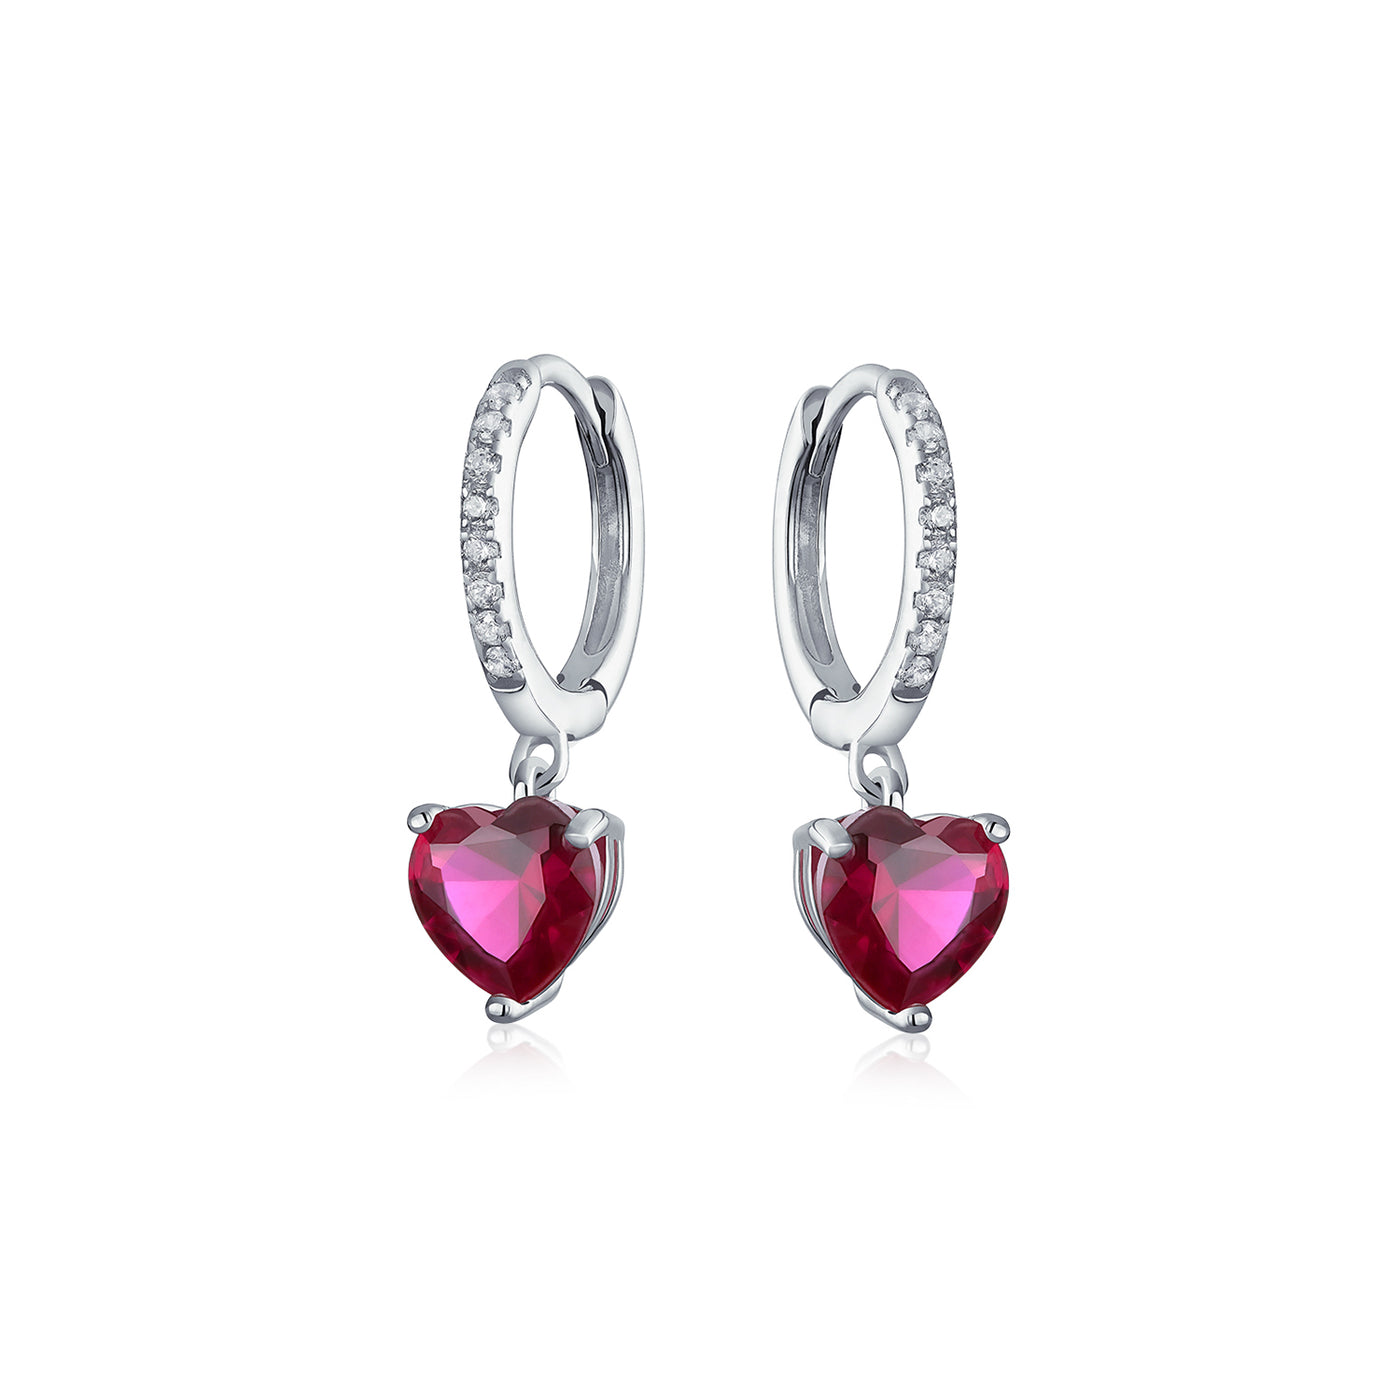 Imitation Ruby Red Pink CZ Heart Hoop Drop Earrings Sterling Silver